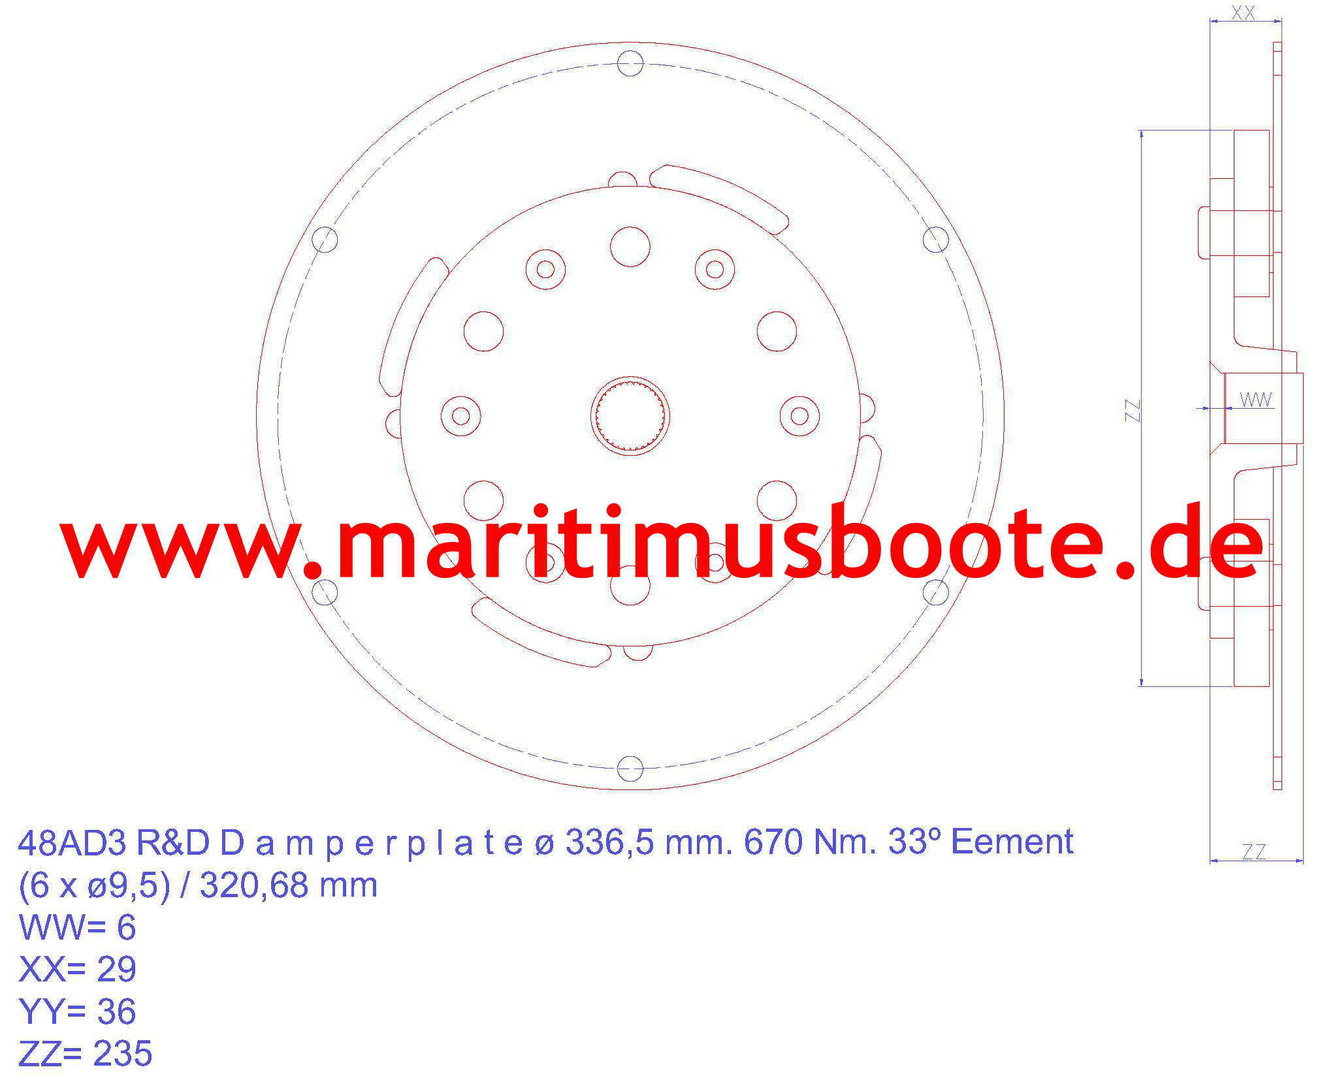 for adjusting ring with inner diameter 28mm Damping element divided 2 halves 